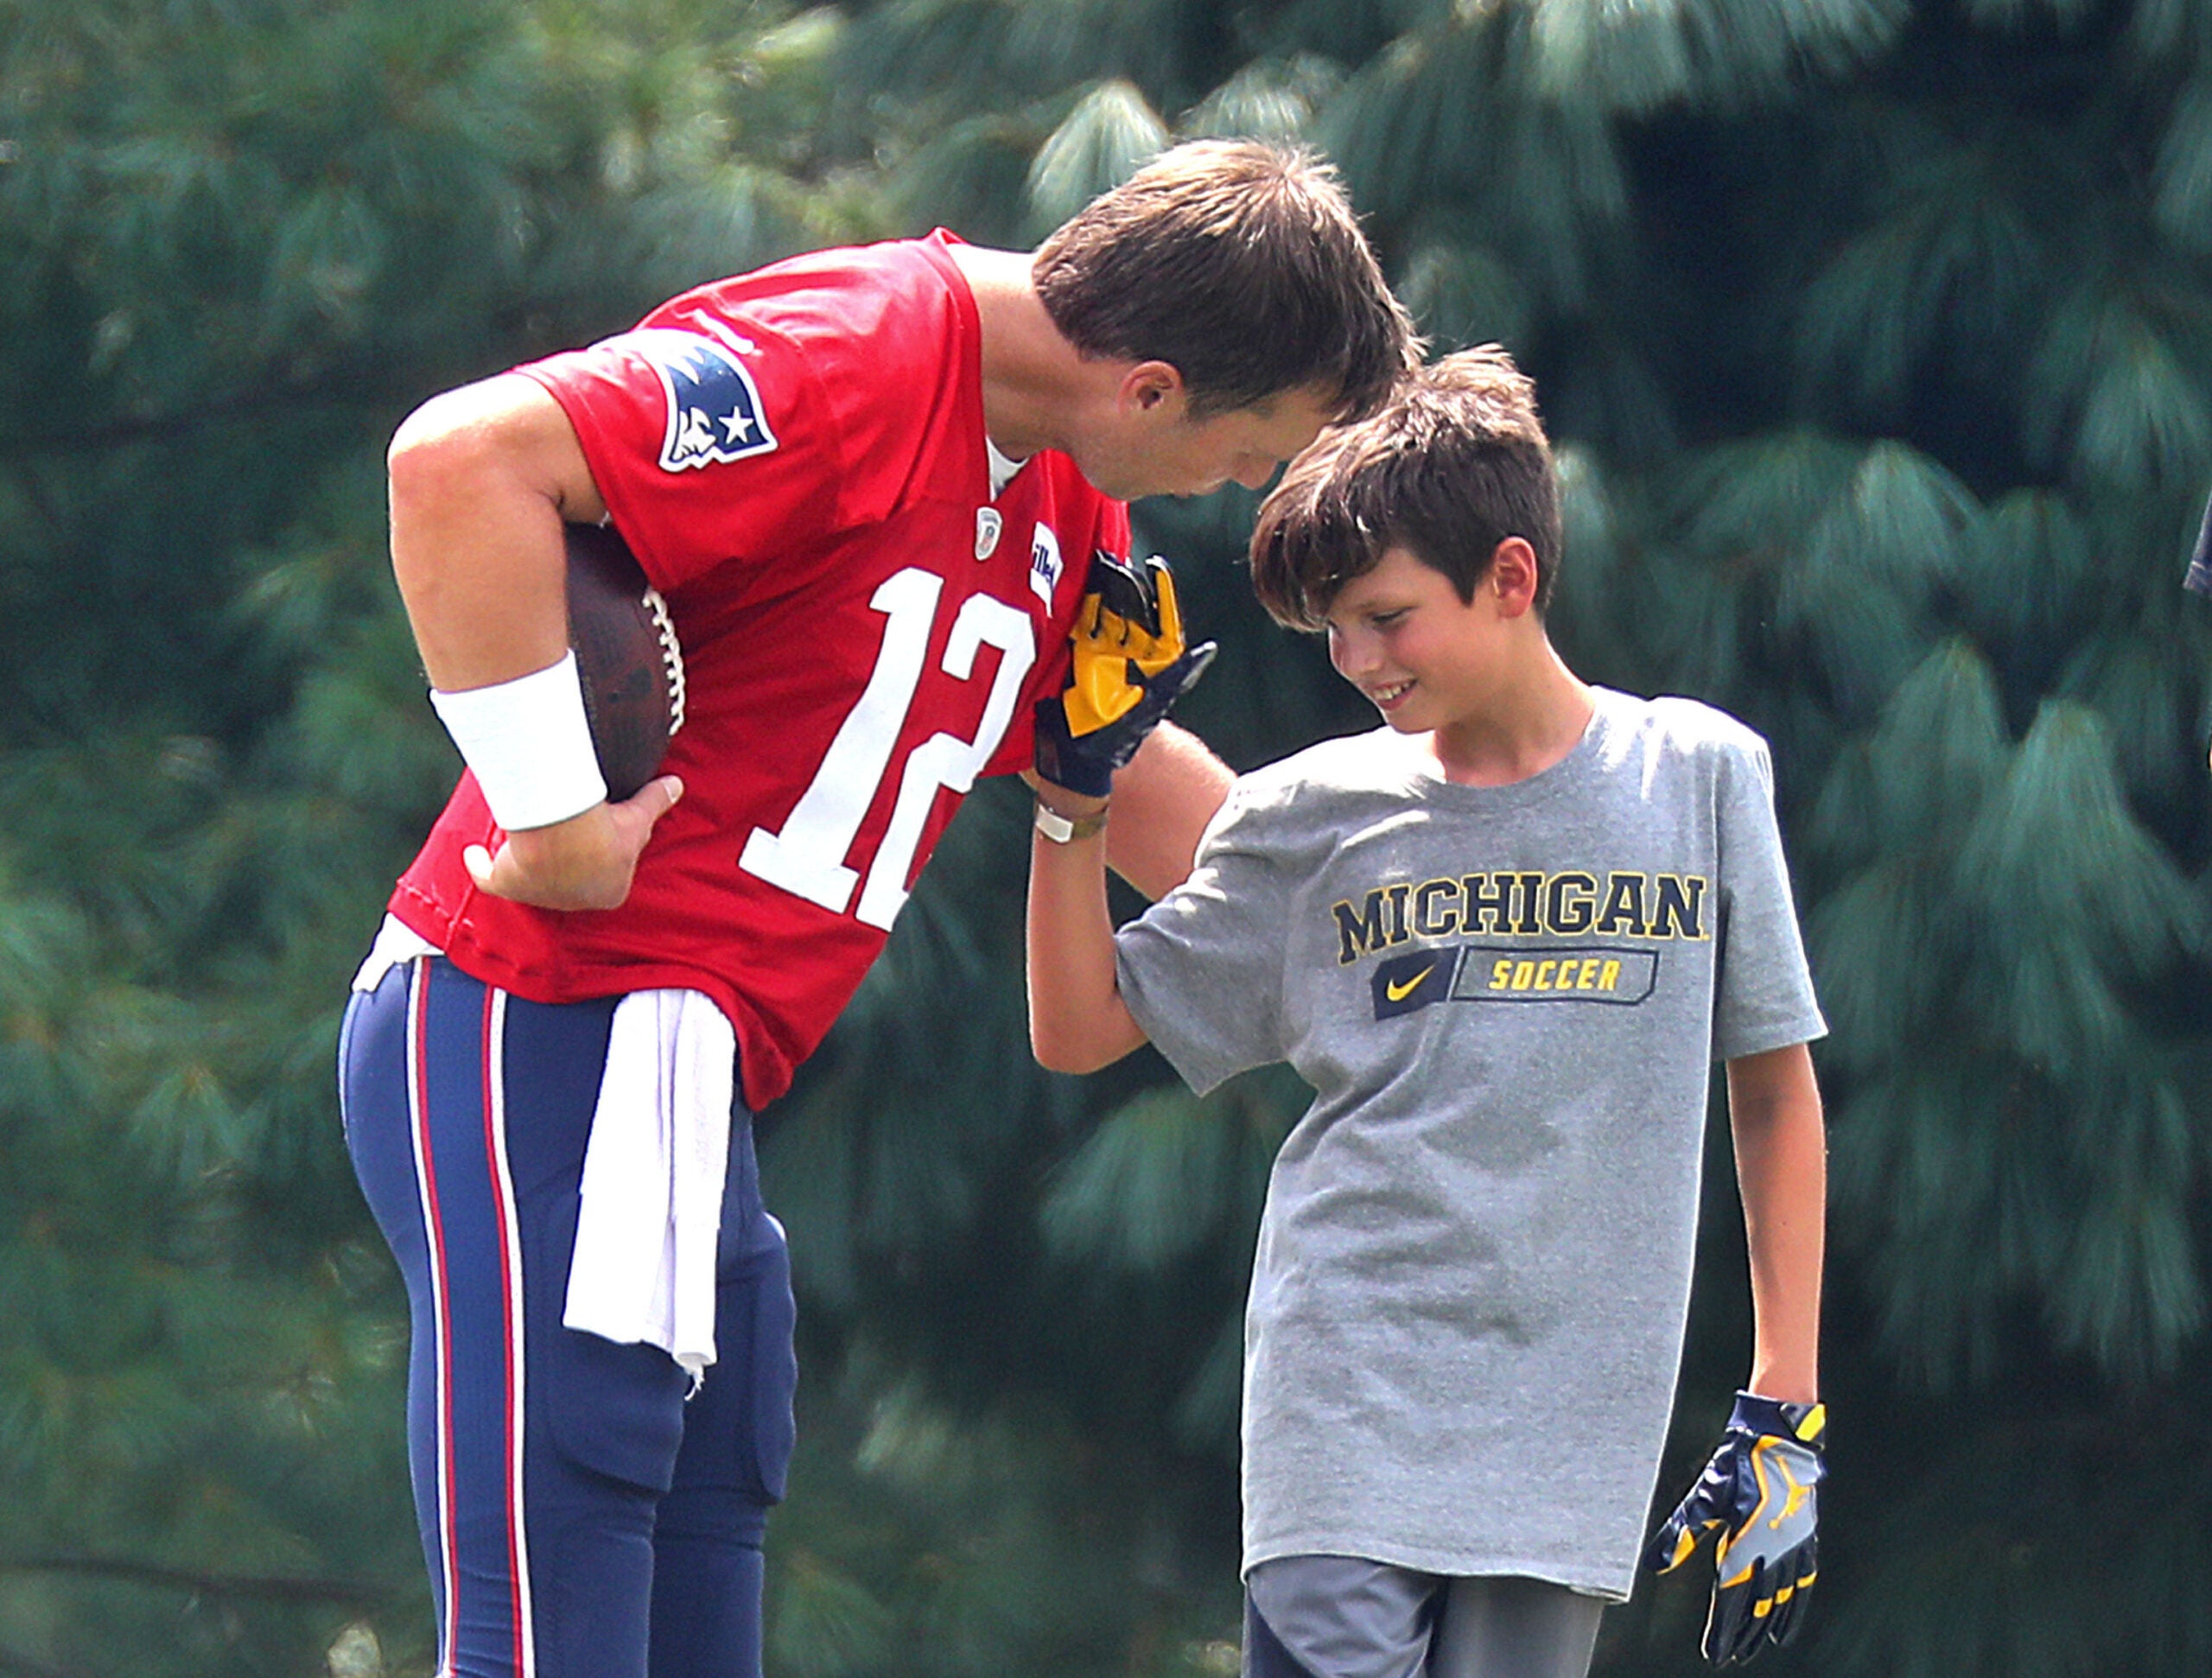 Tom Brady to his son: